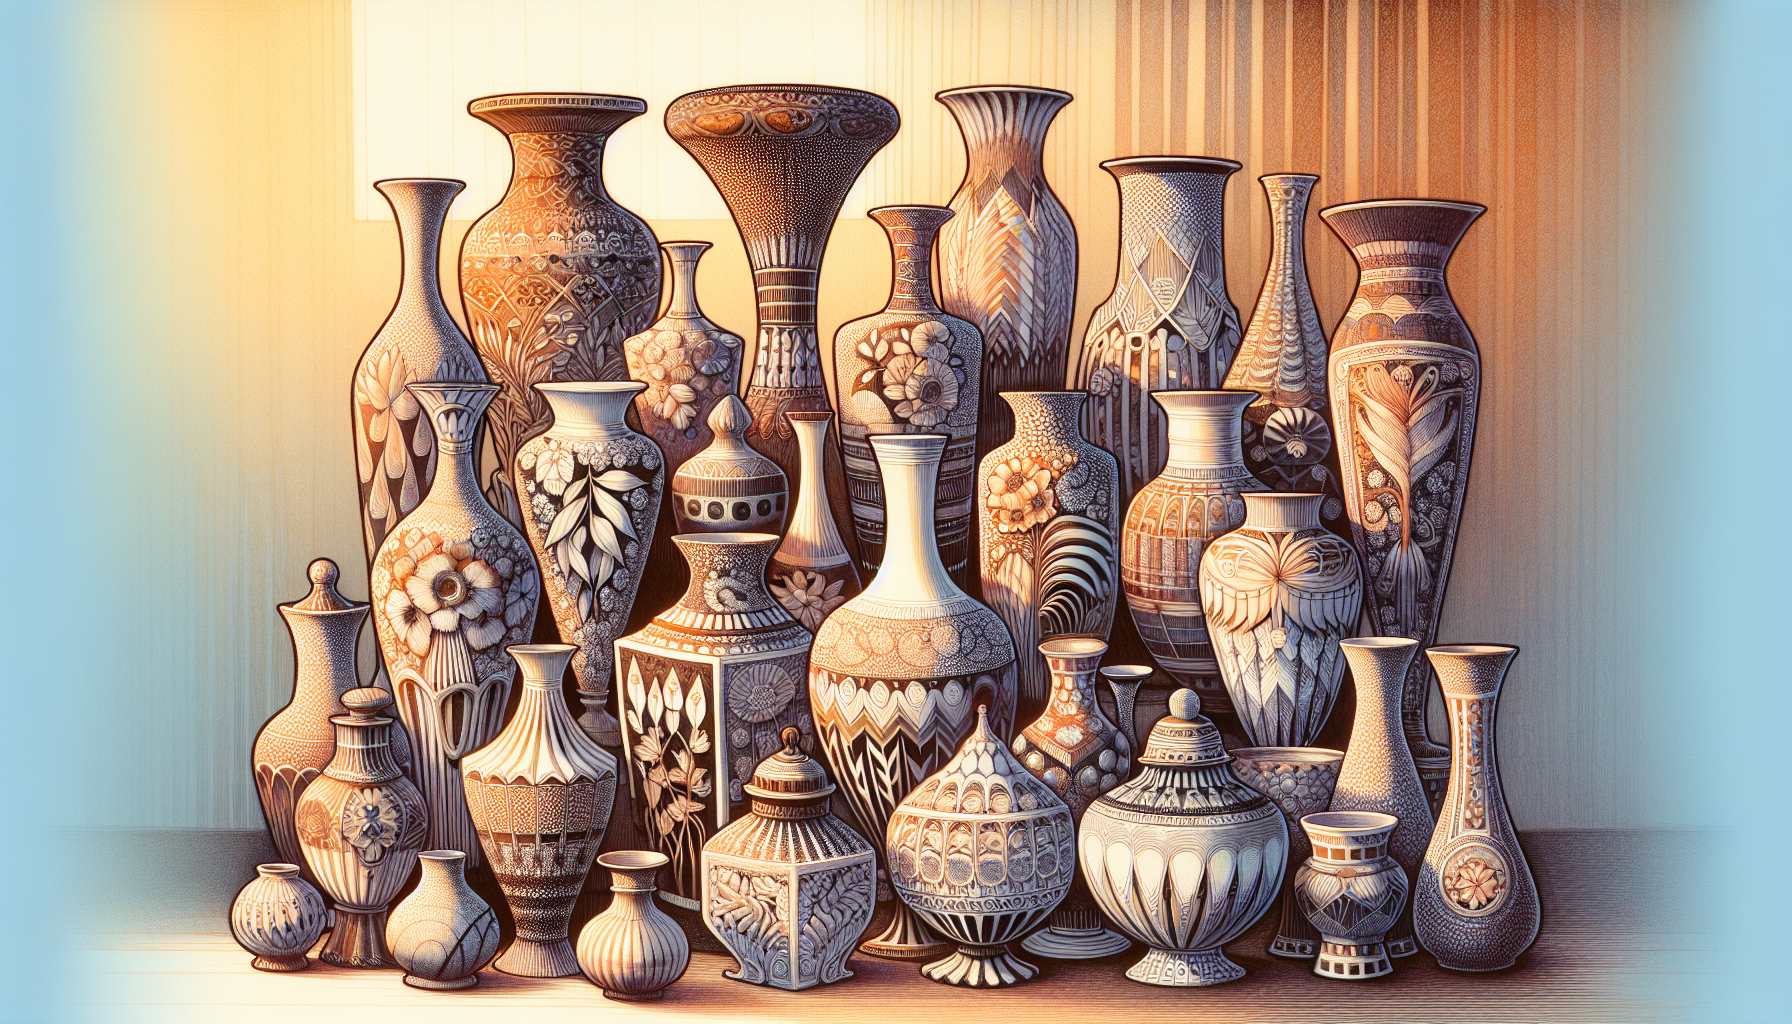 Illustration of various ceramic and porcelain vases